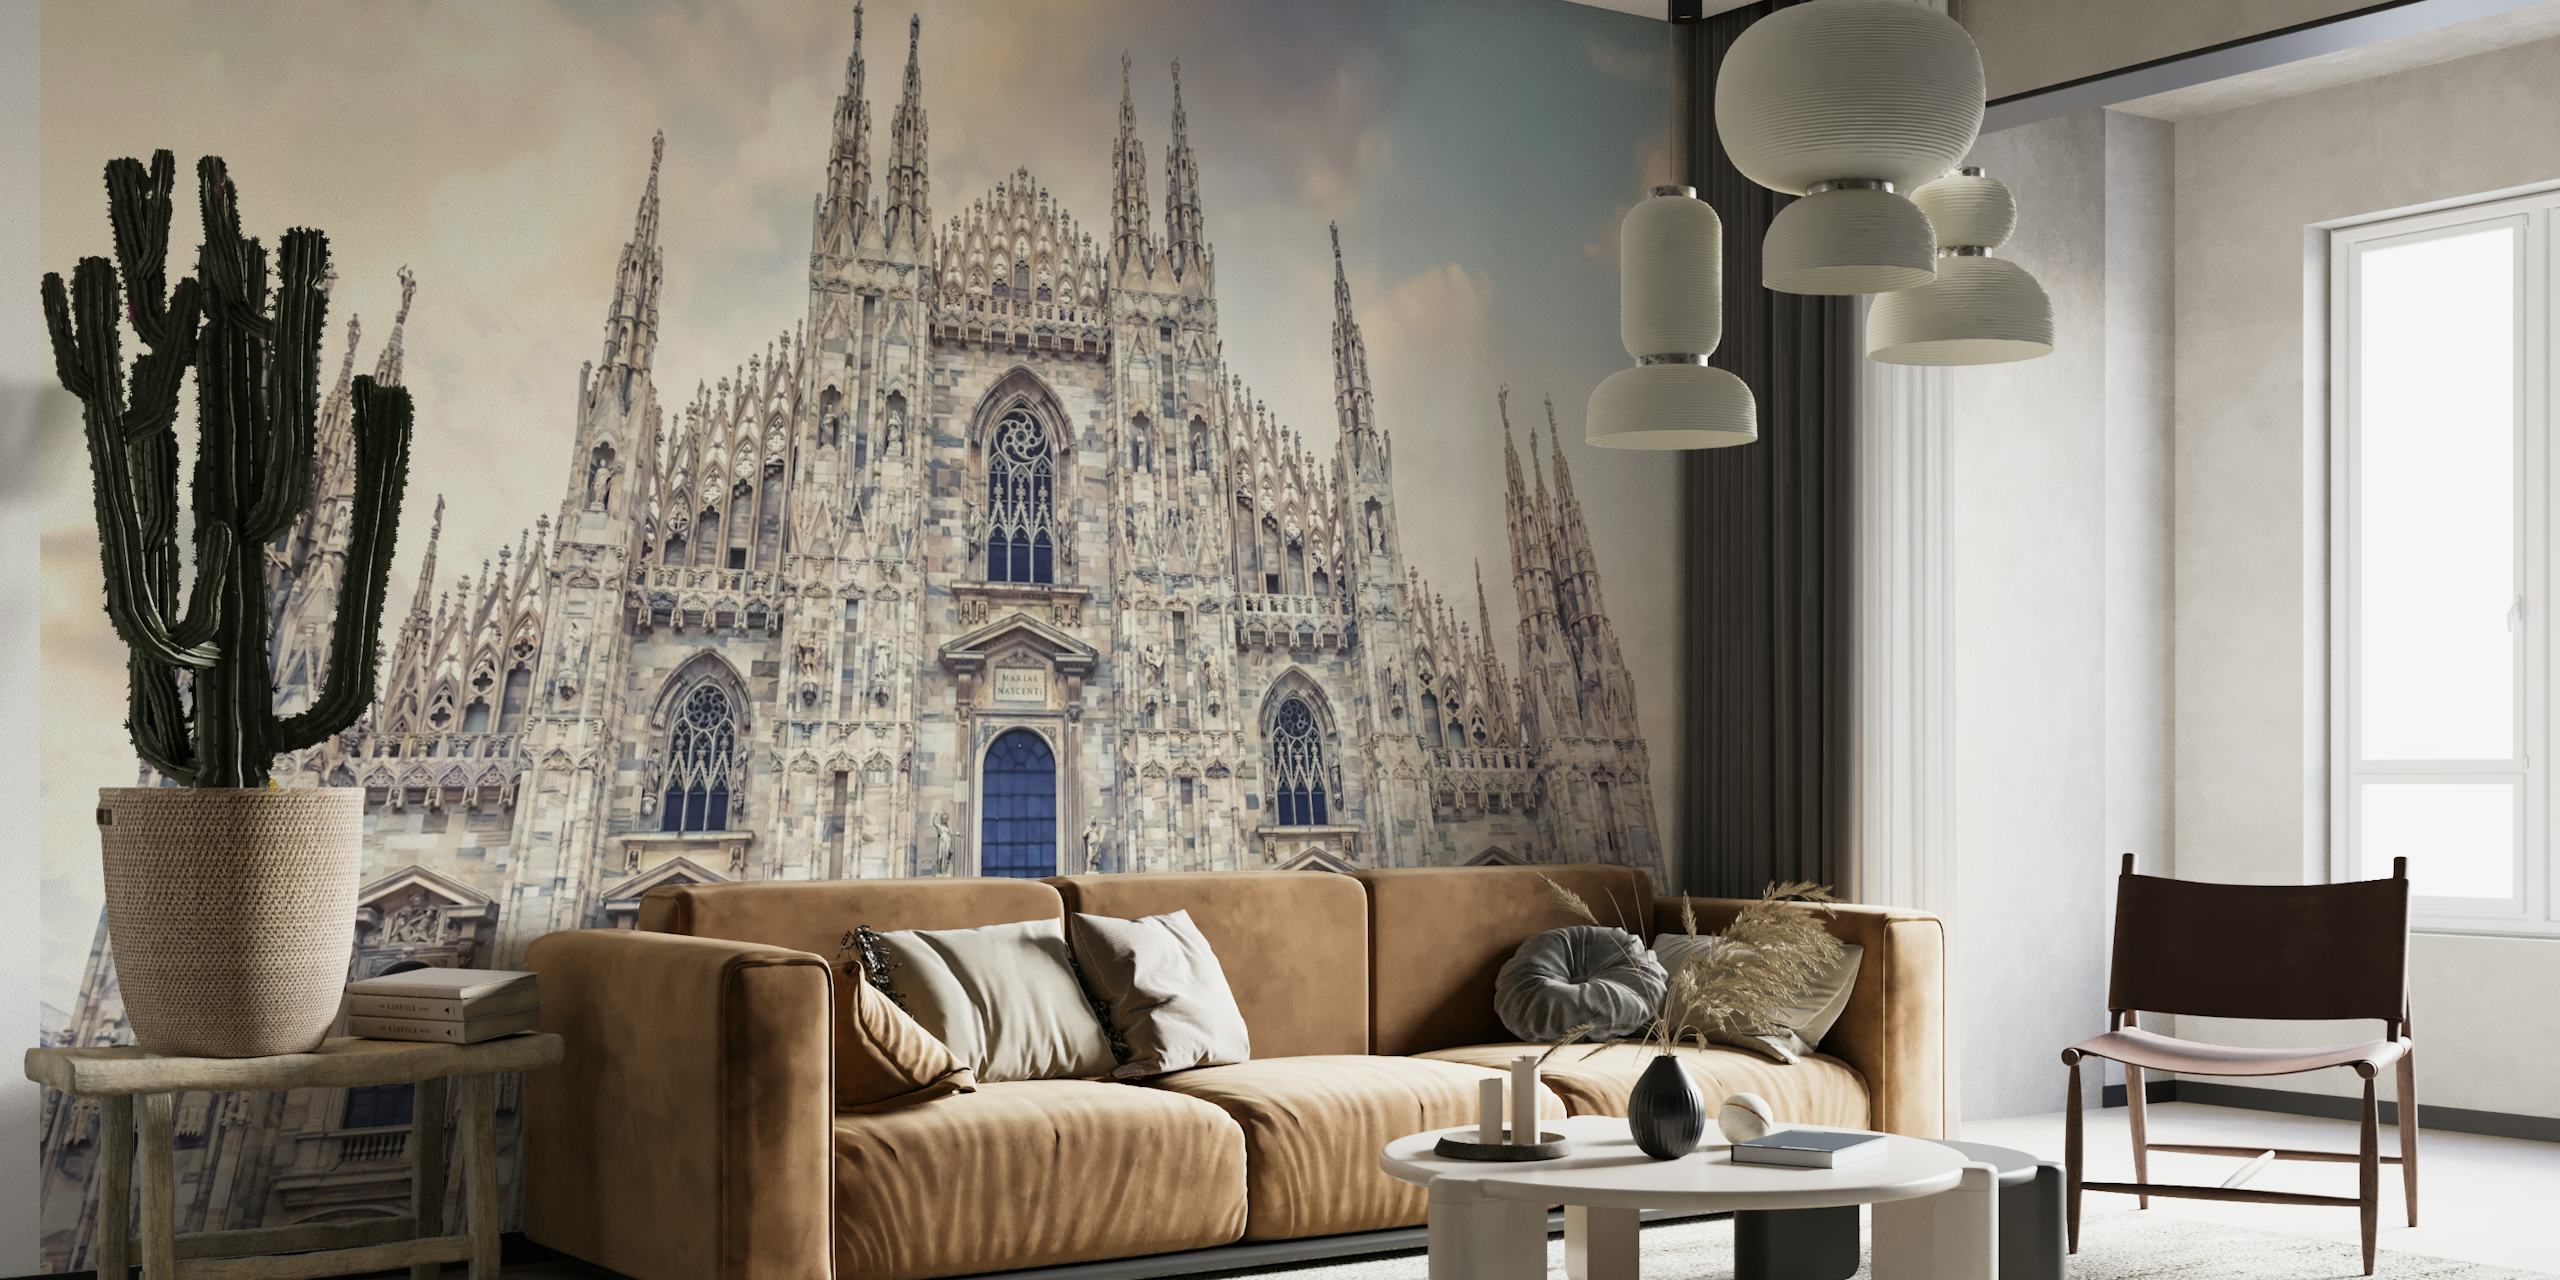 Milan Cathedral papel pintado